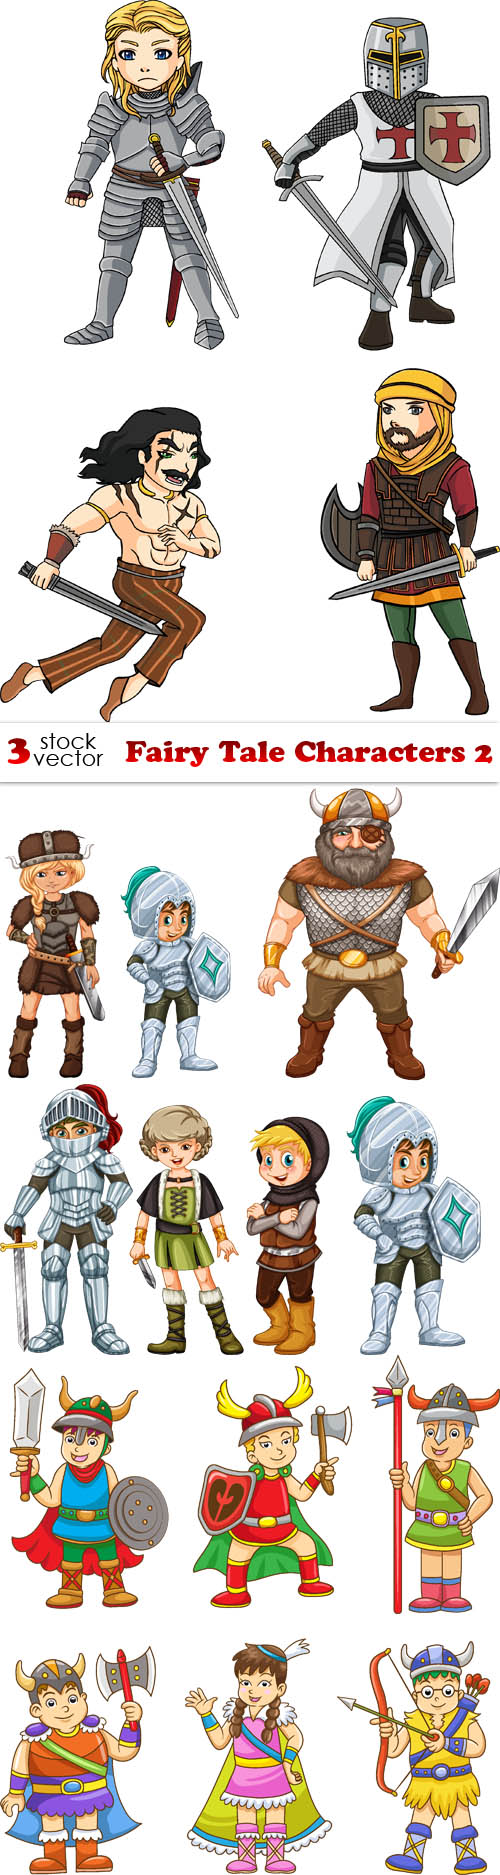 Vectors - Fairy Tale Characters 2